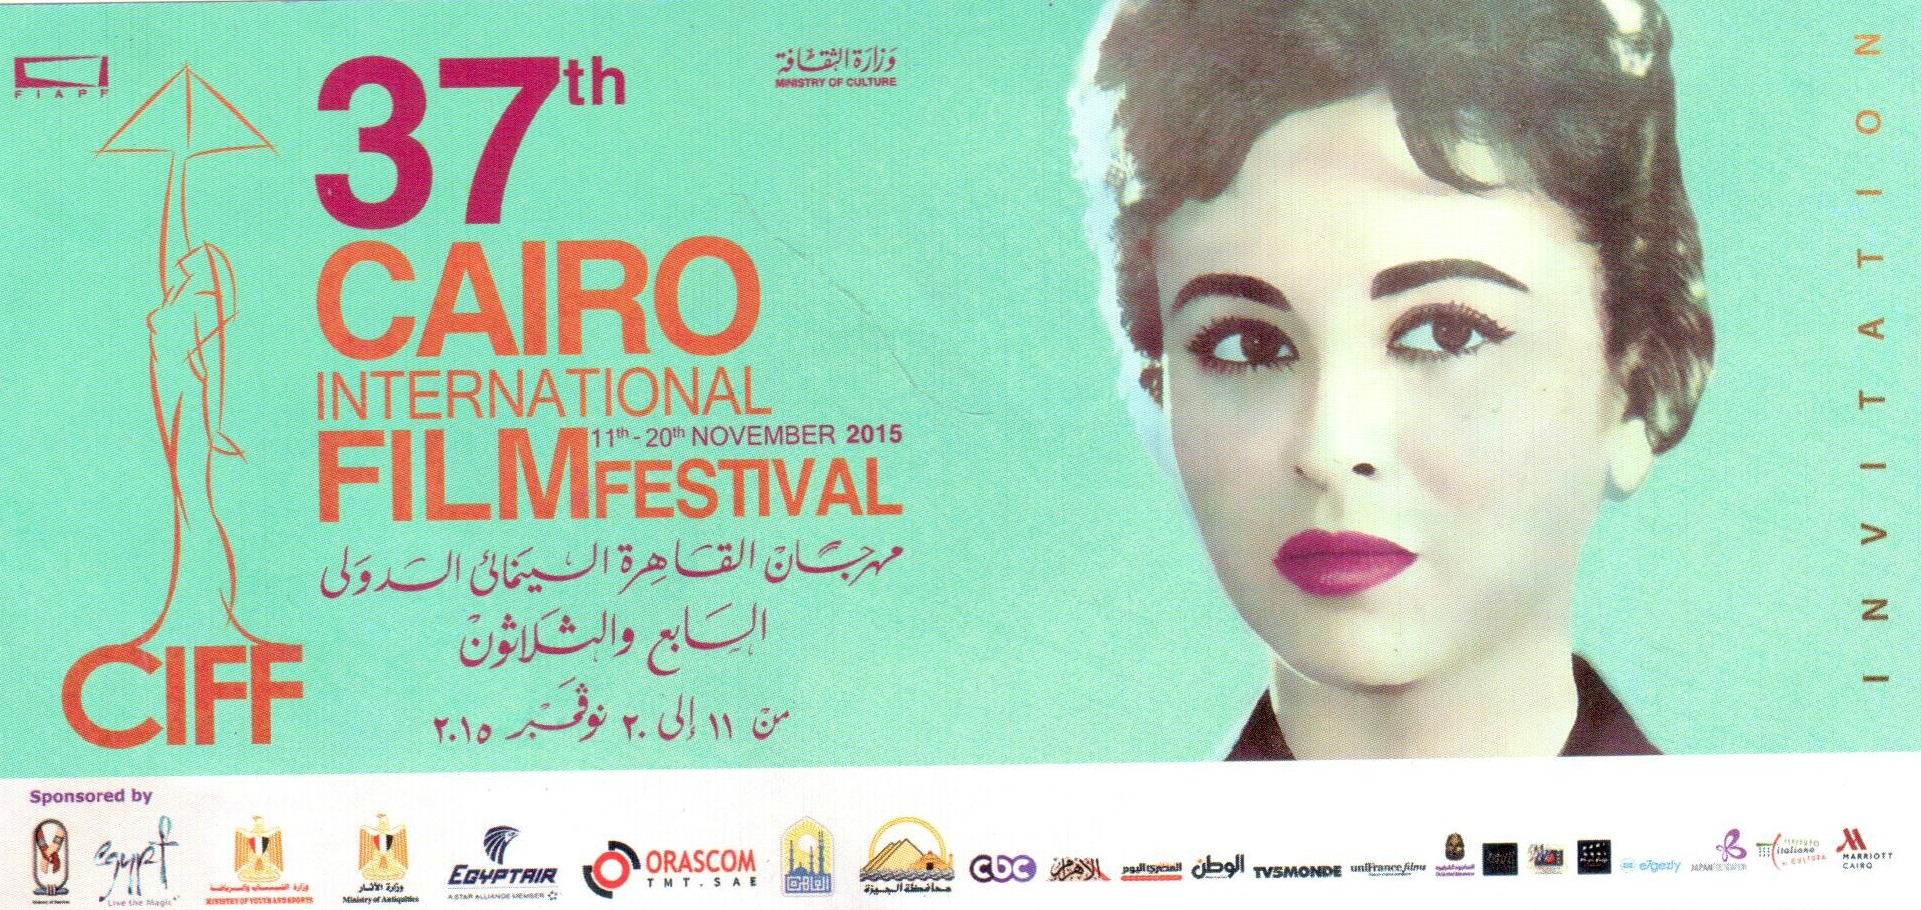 Cairo film_festival